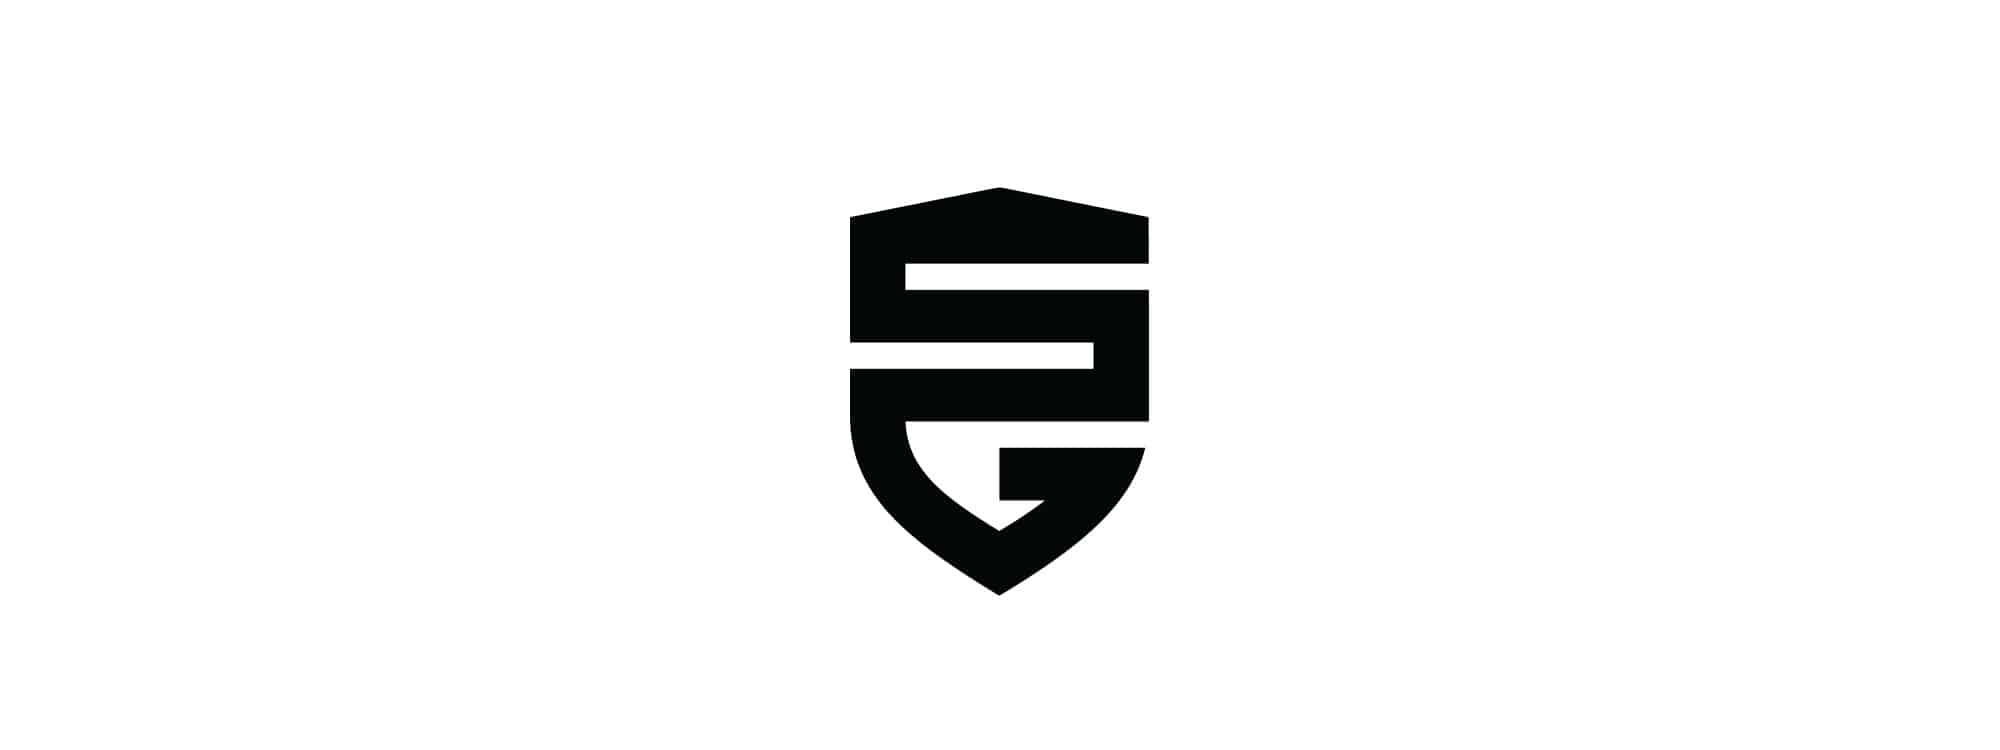 SG Shield Fitness Logo Design